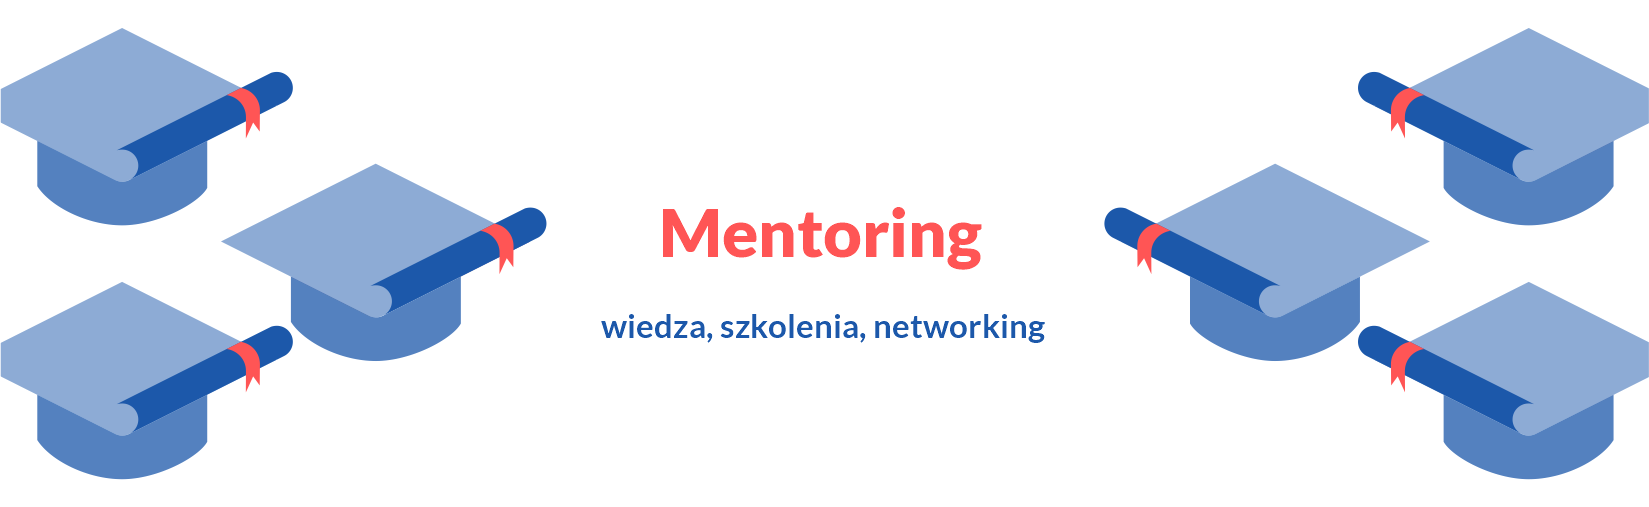 Mentoring - wiedza, szkolenia, networking